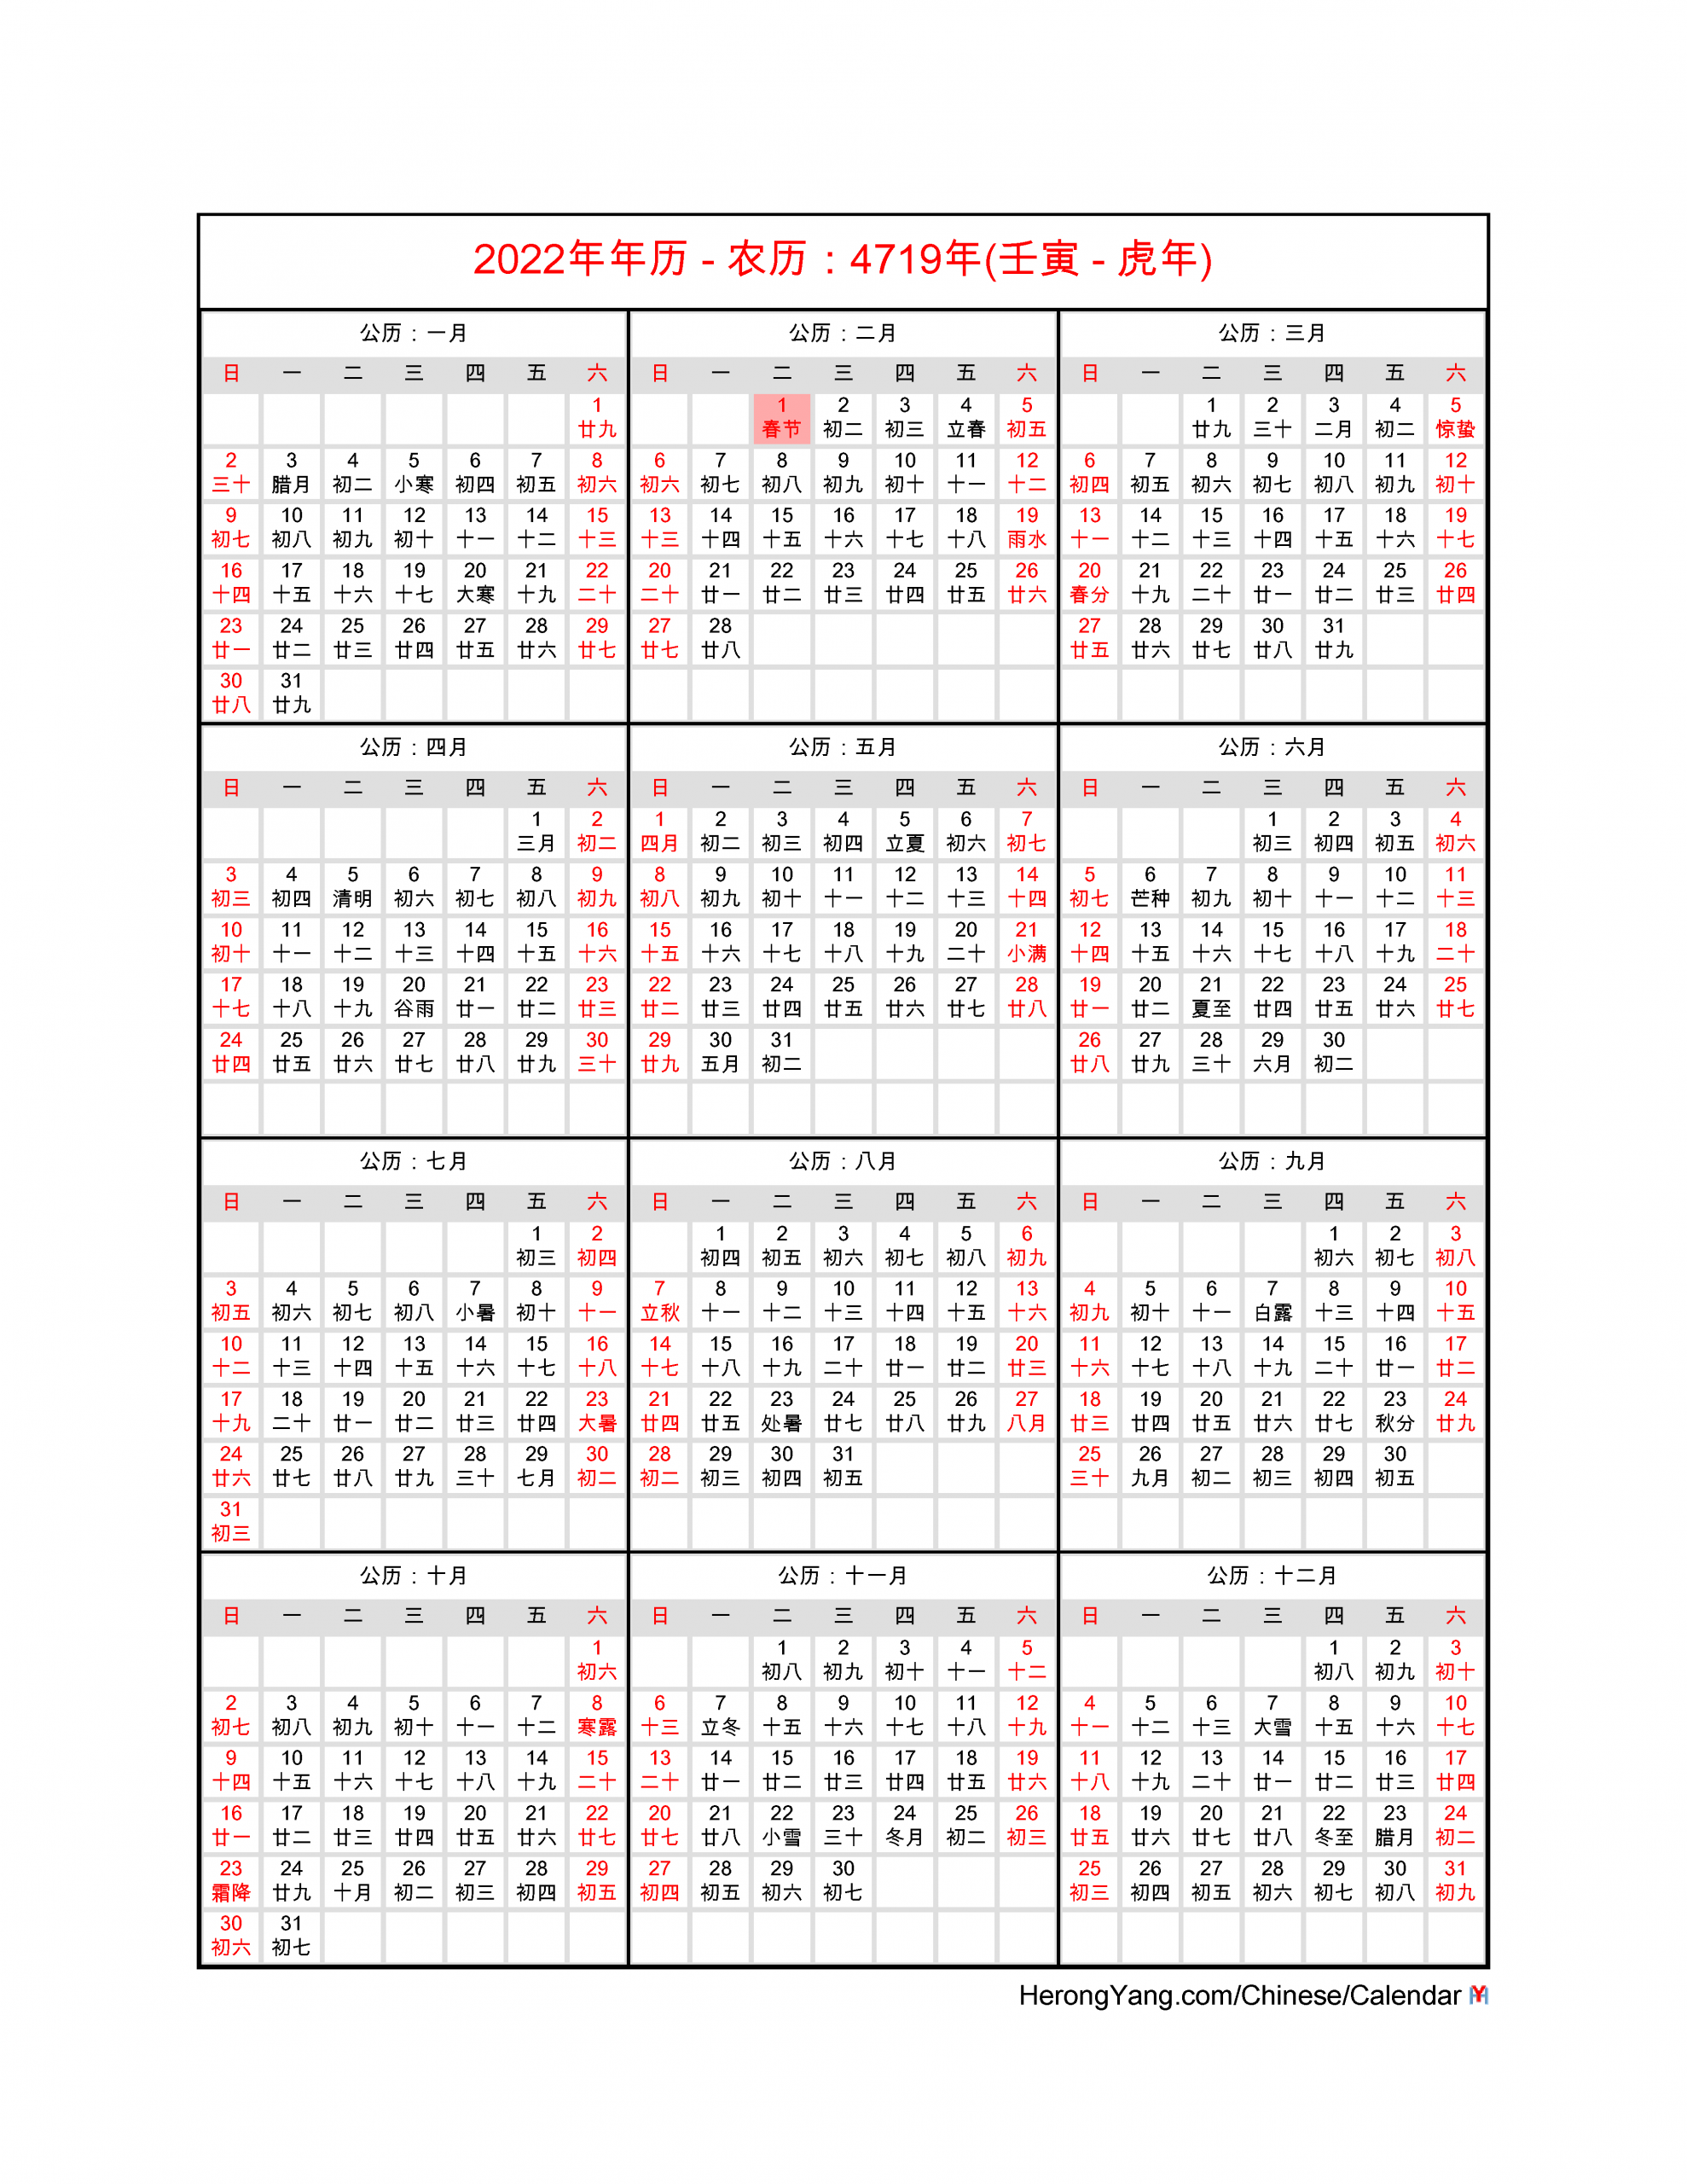 Time And Date Lunar Calendar 2022